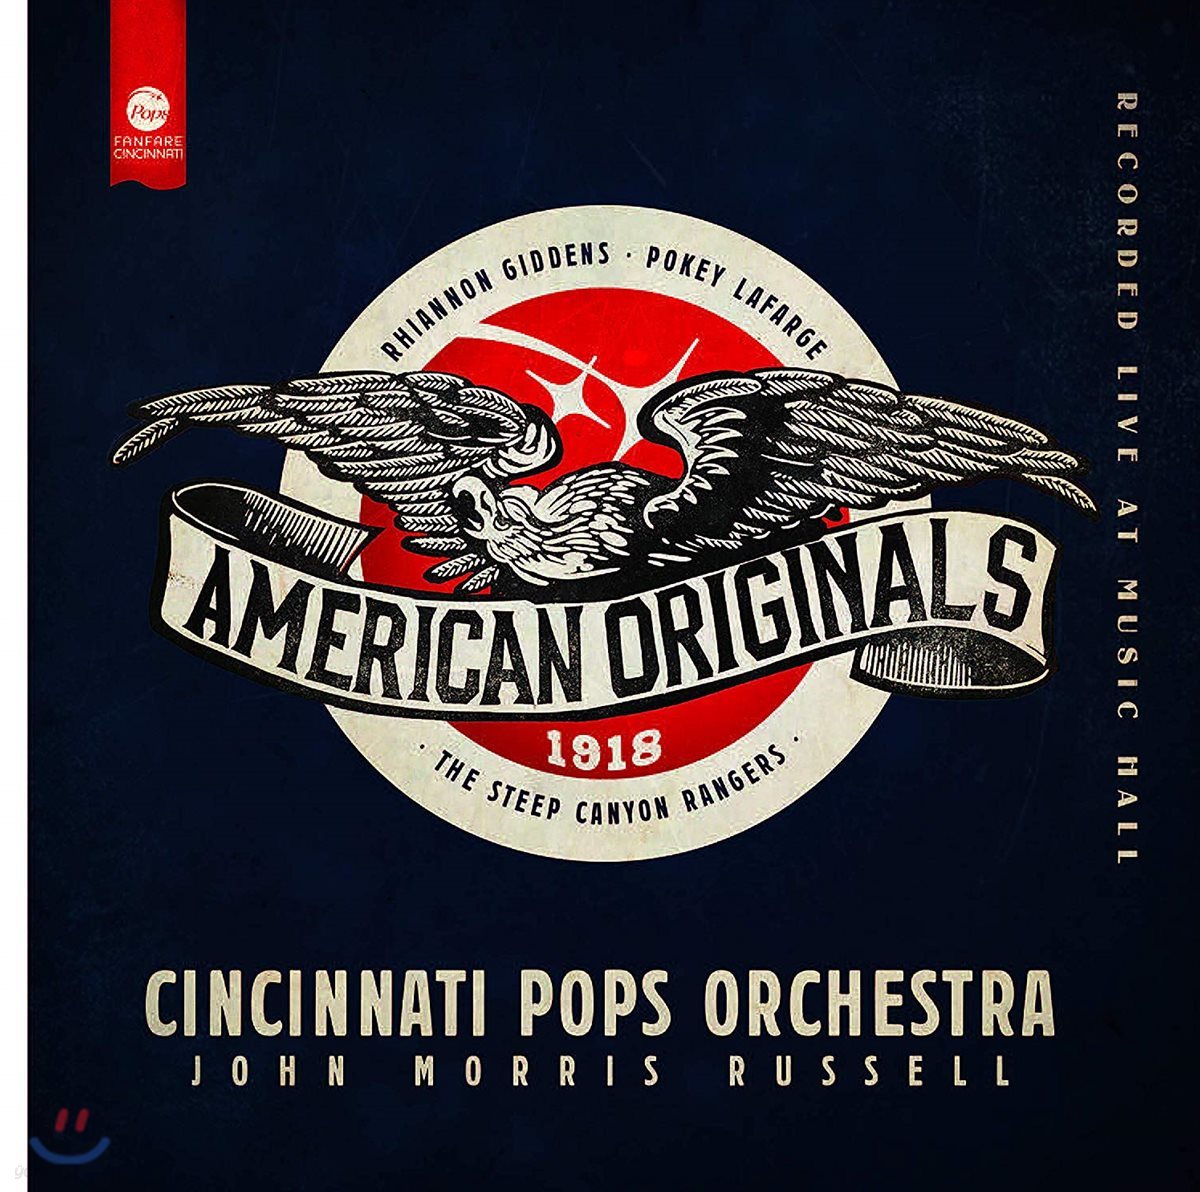 Cincinnati Pops Orchestra 1918년 미국의 인상을 음악으로 표현한 작품들 (American Originals - 1918)